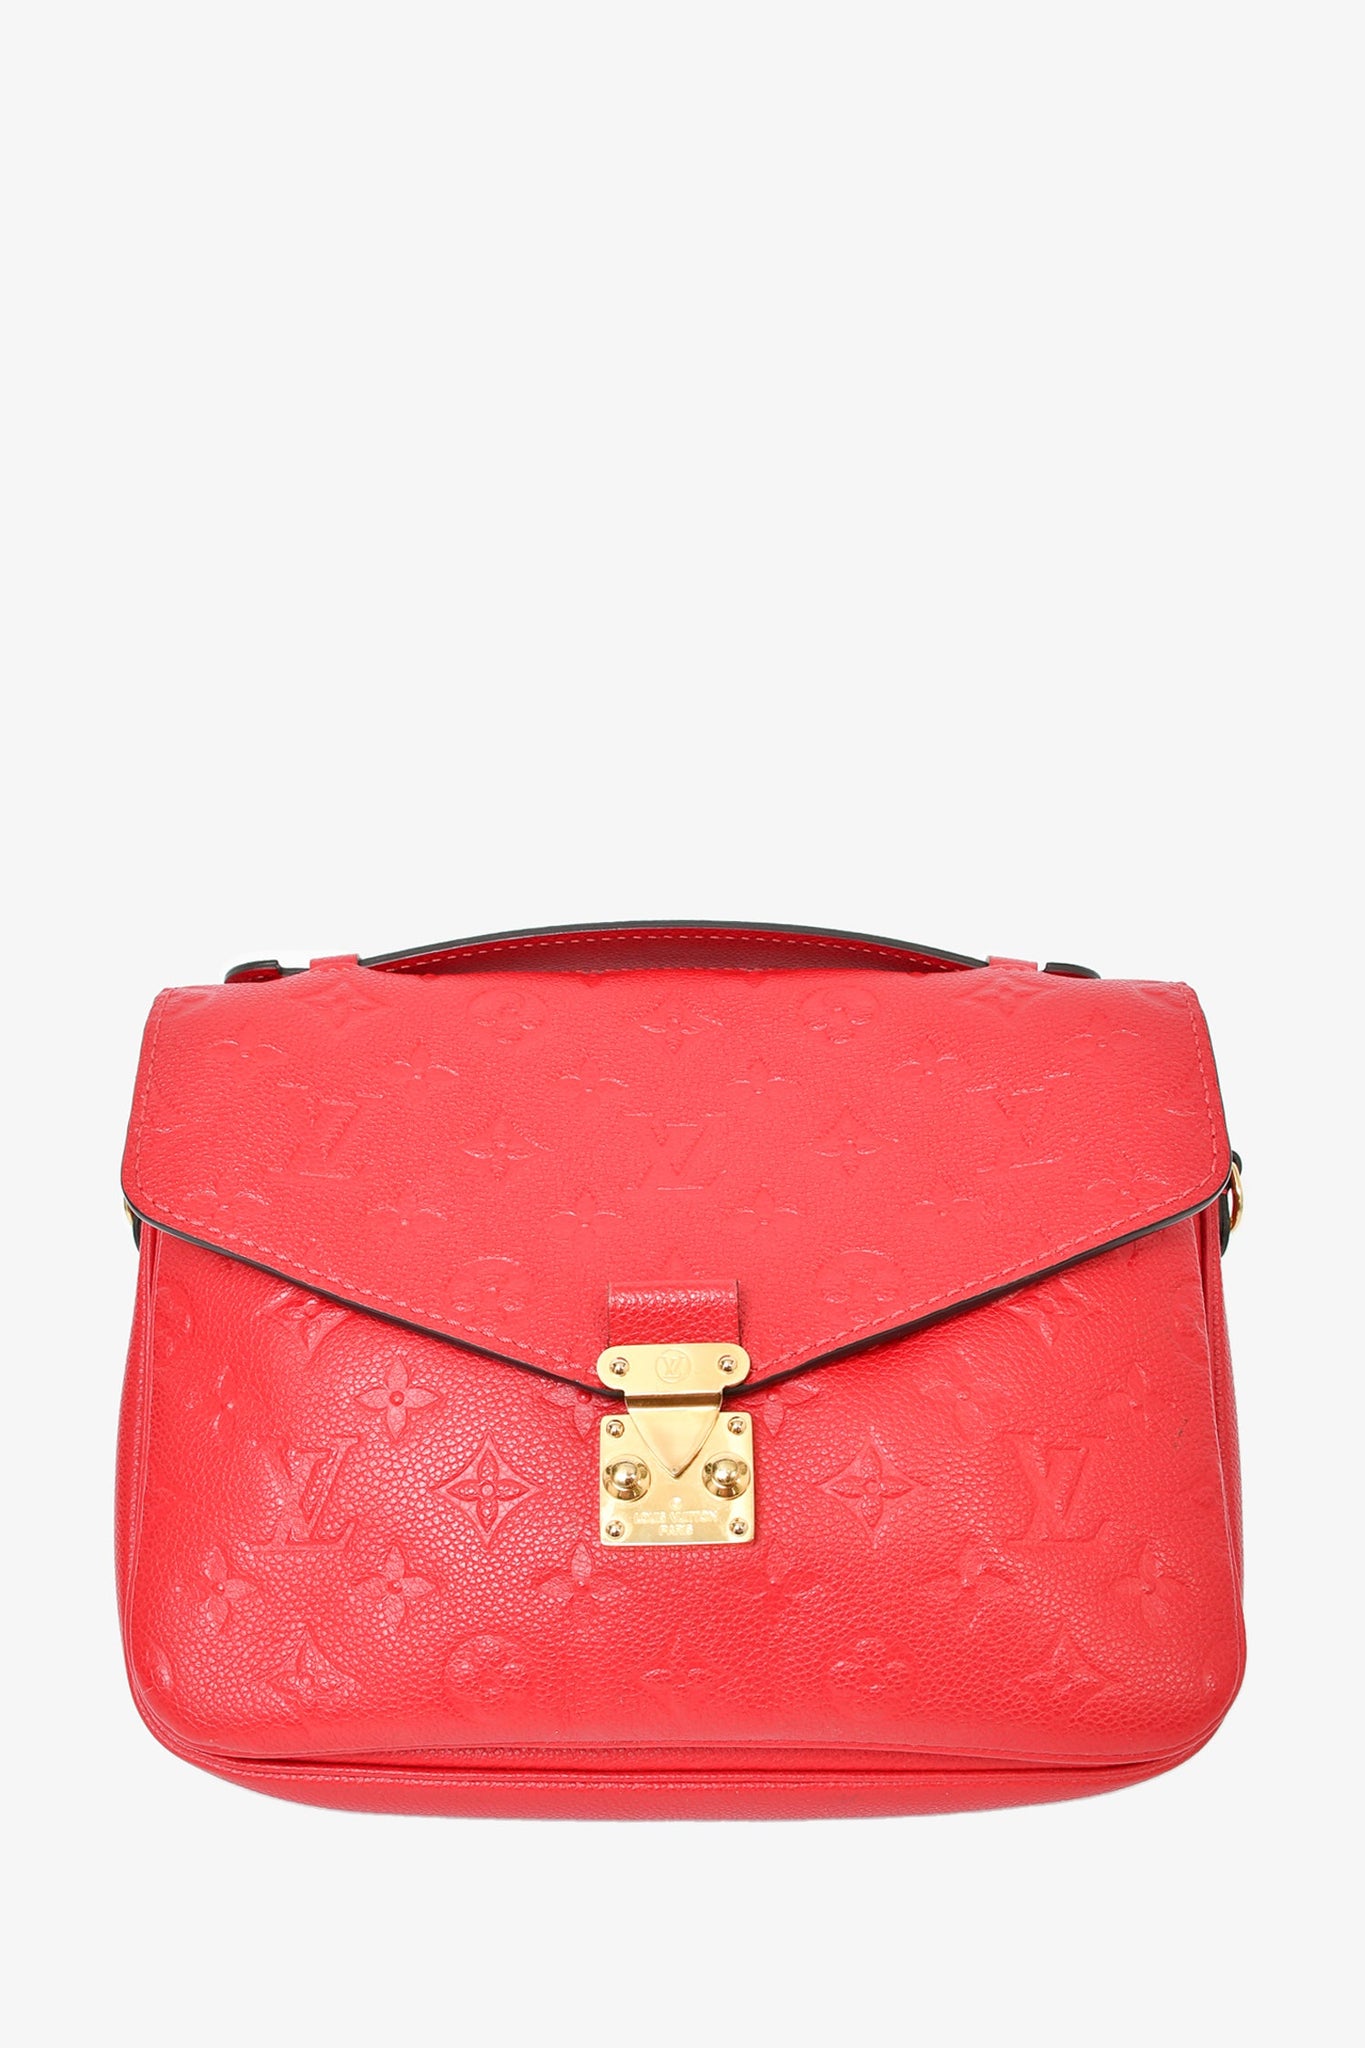 Louis Vuitton 2018 Red Empreinte Leather Pochette Metis Bag with